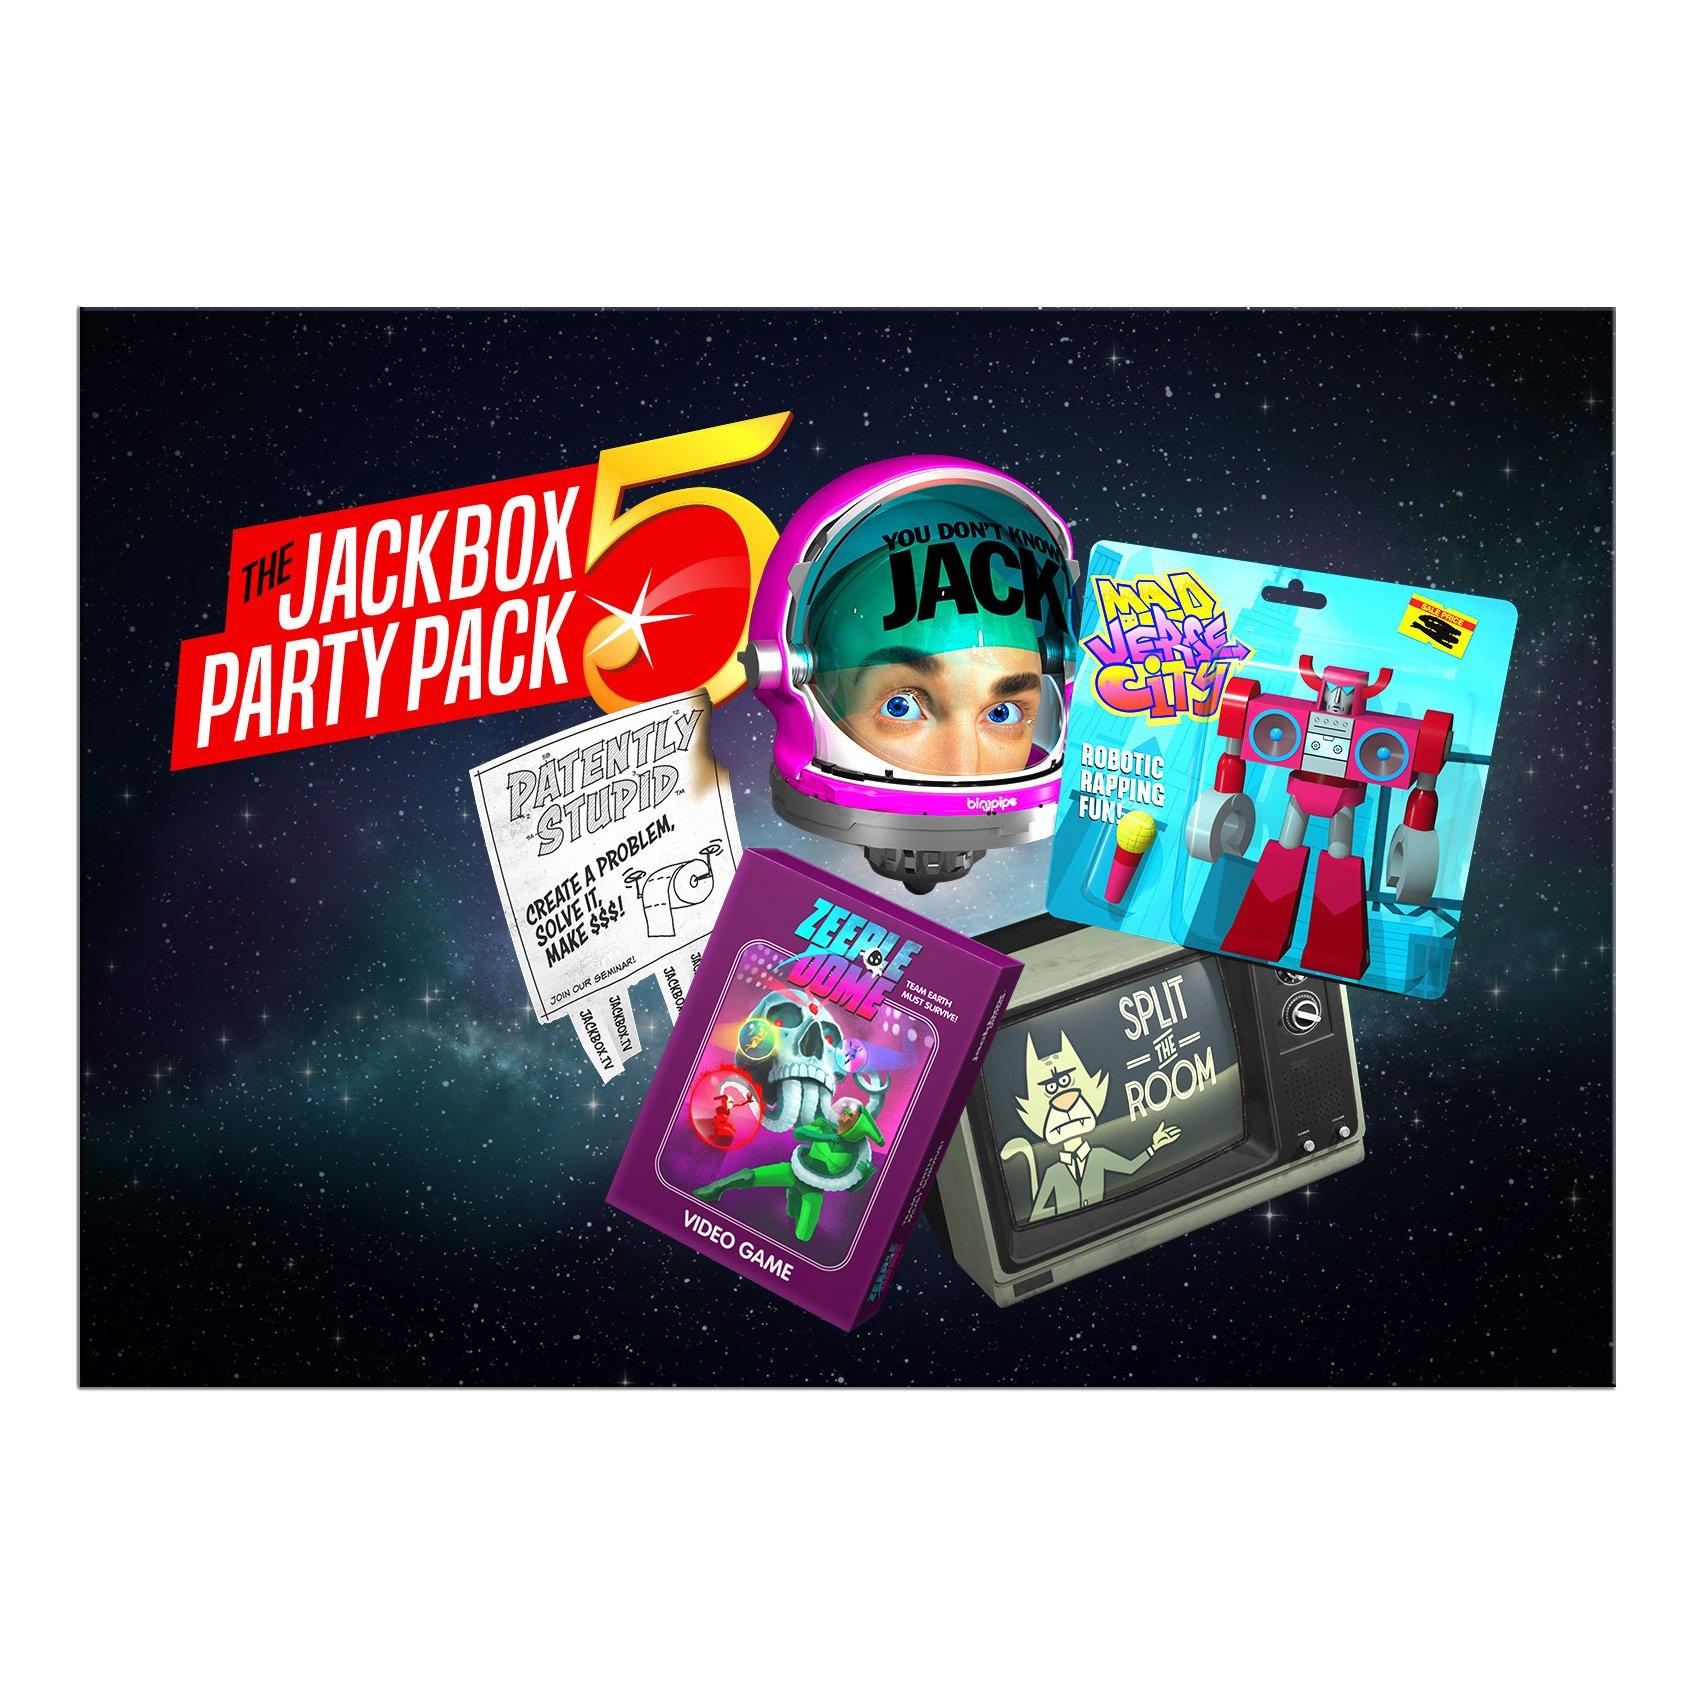 jackbox party pack 3 nintendo switch